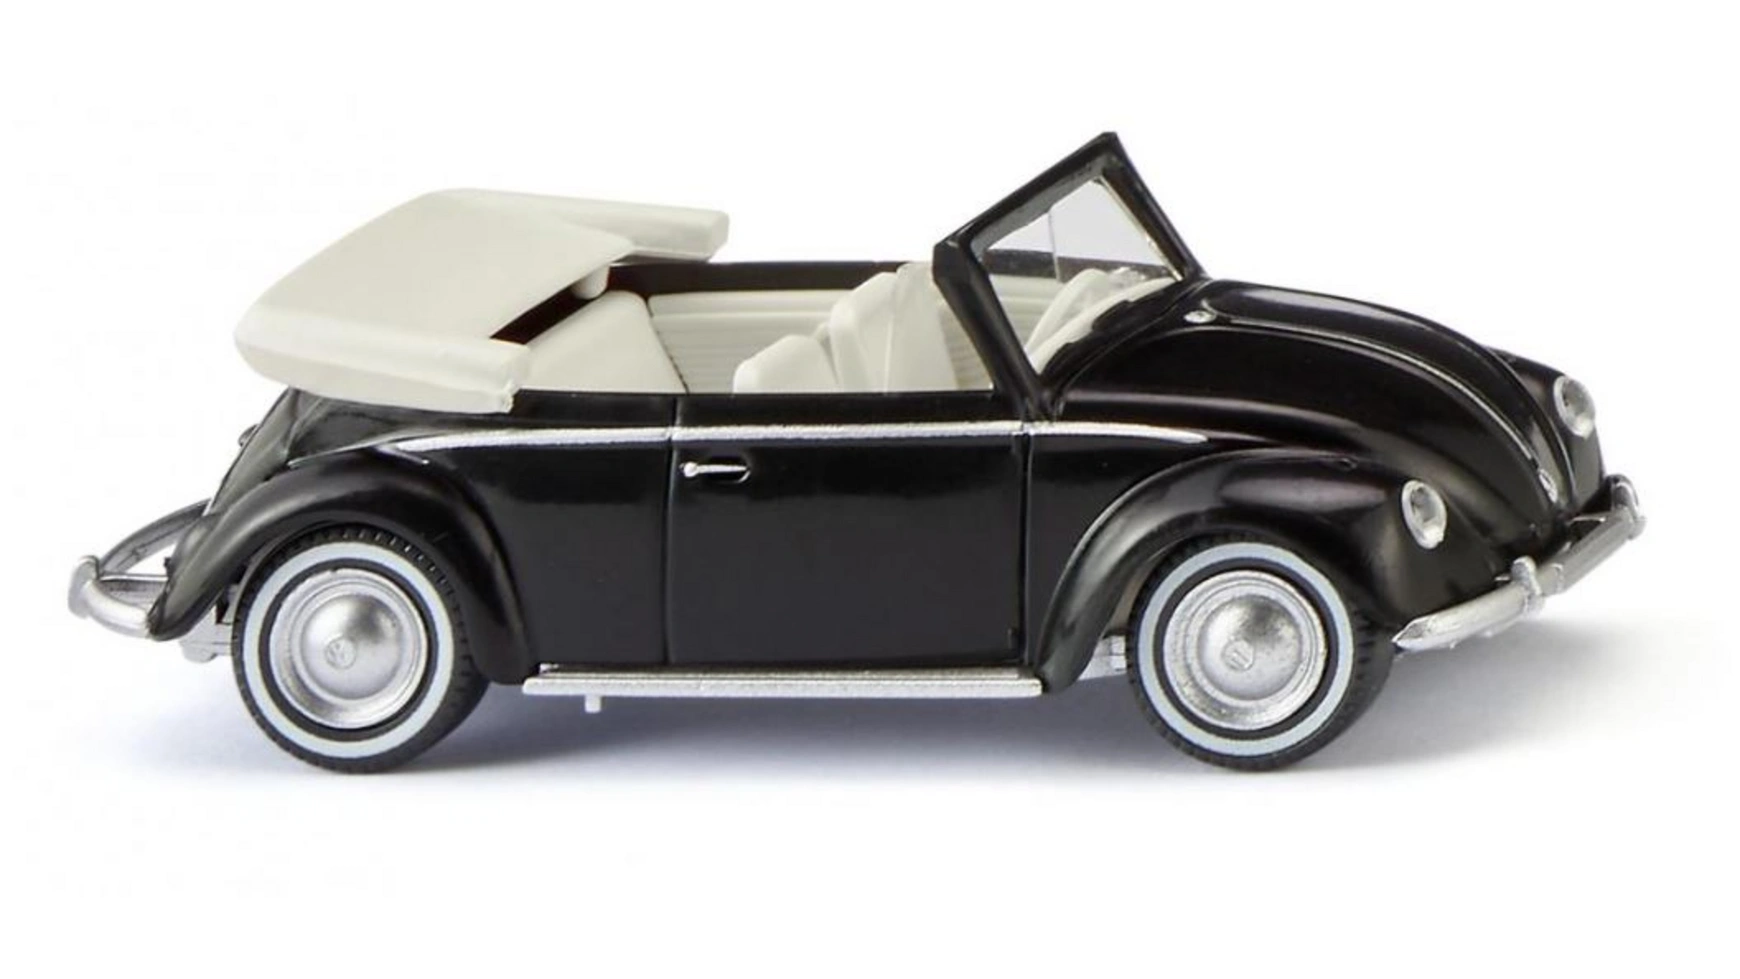 Wiking 1:87 VW Beetle 1200 Cabrio черный набор jada toys tmnt hwr vw drag beetle w michelangelo figure 34018 1959 vw drag beetle